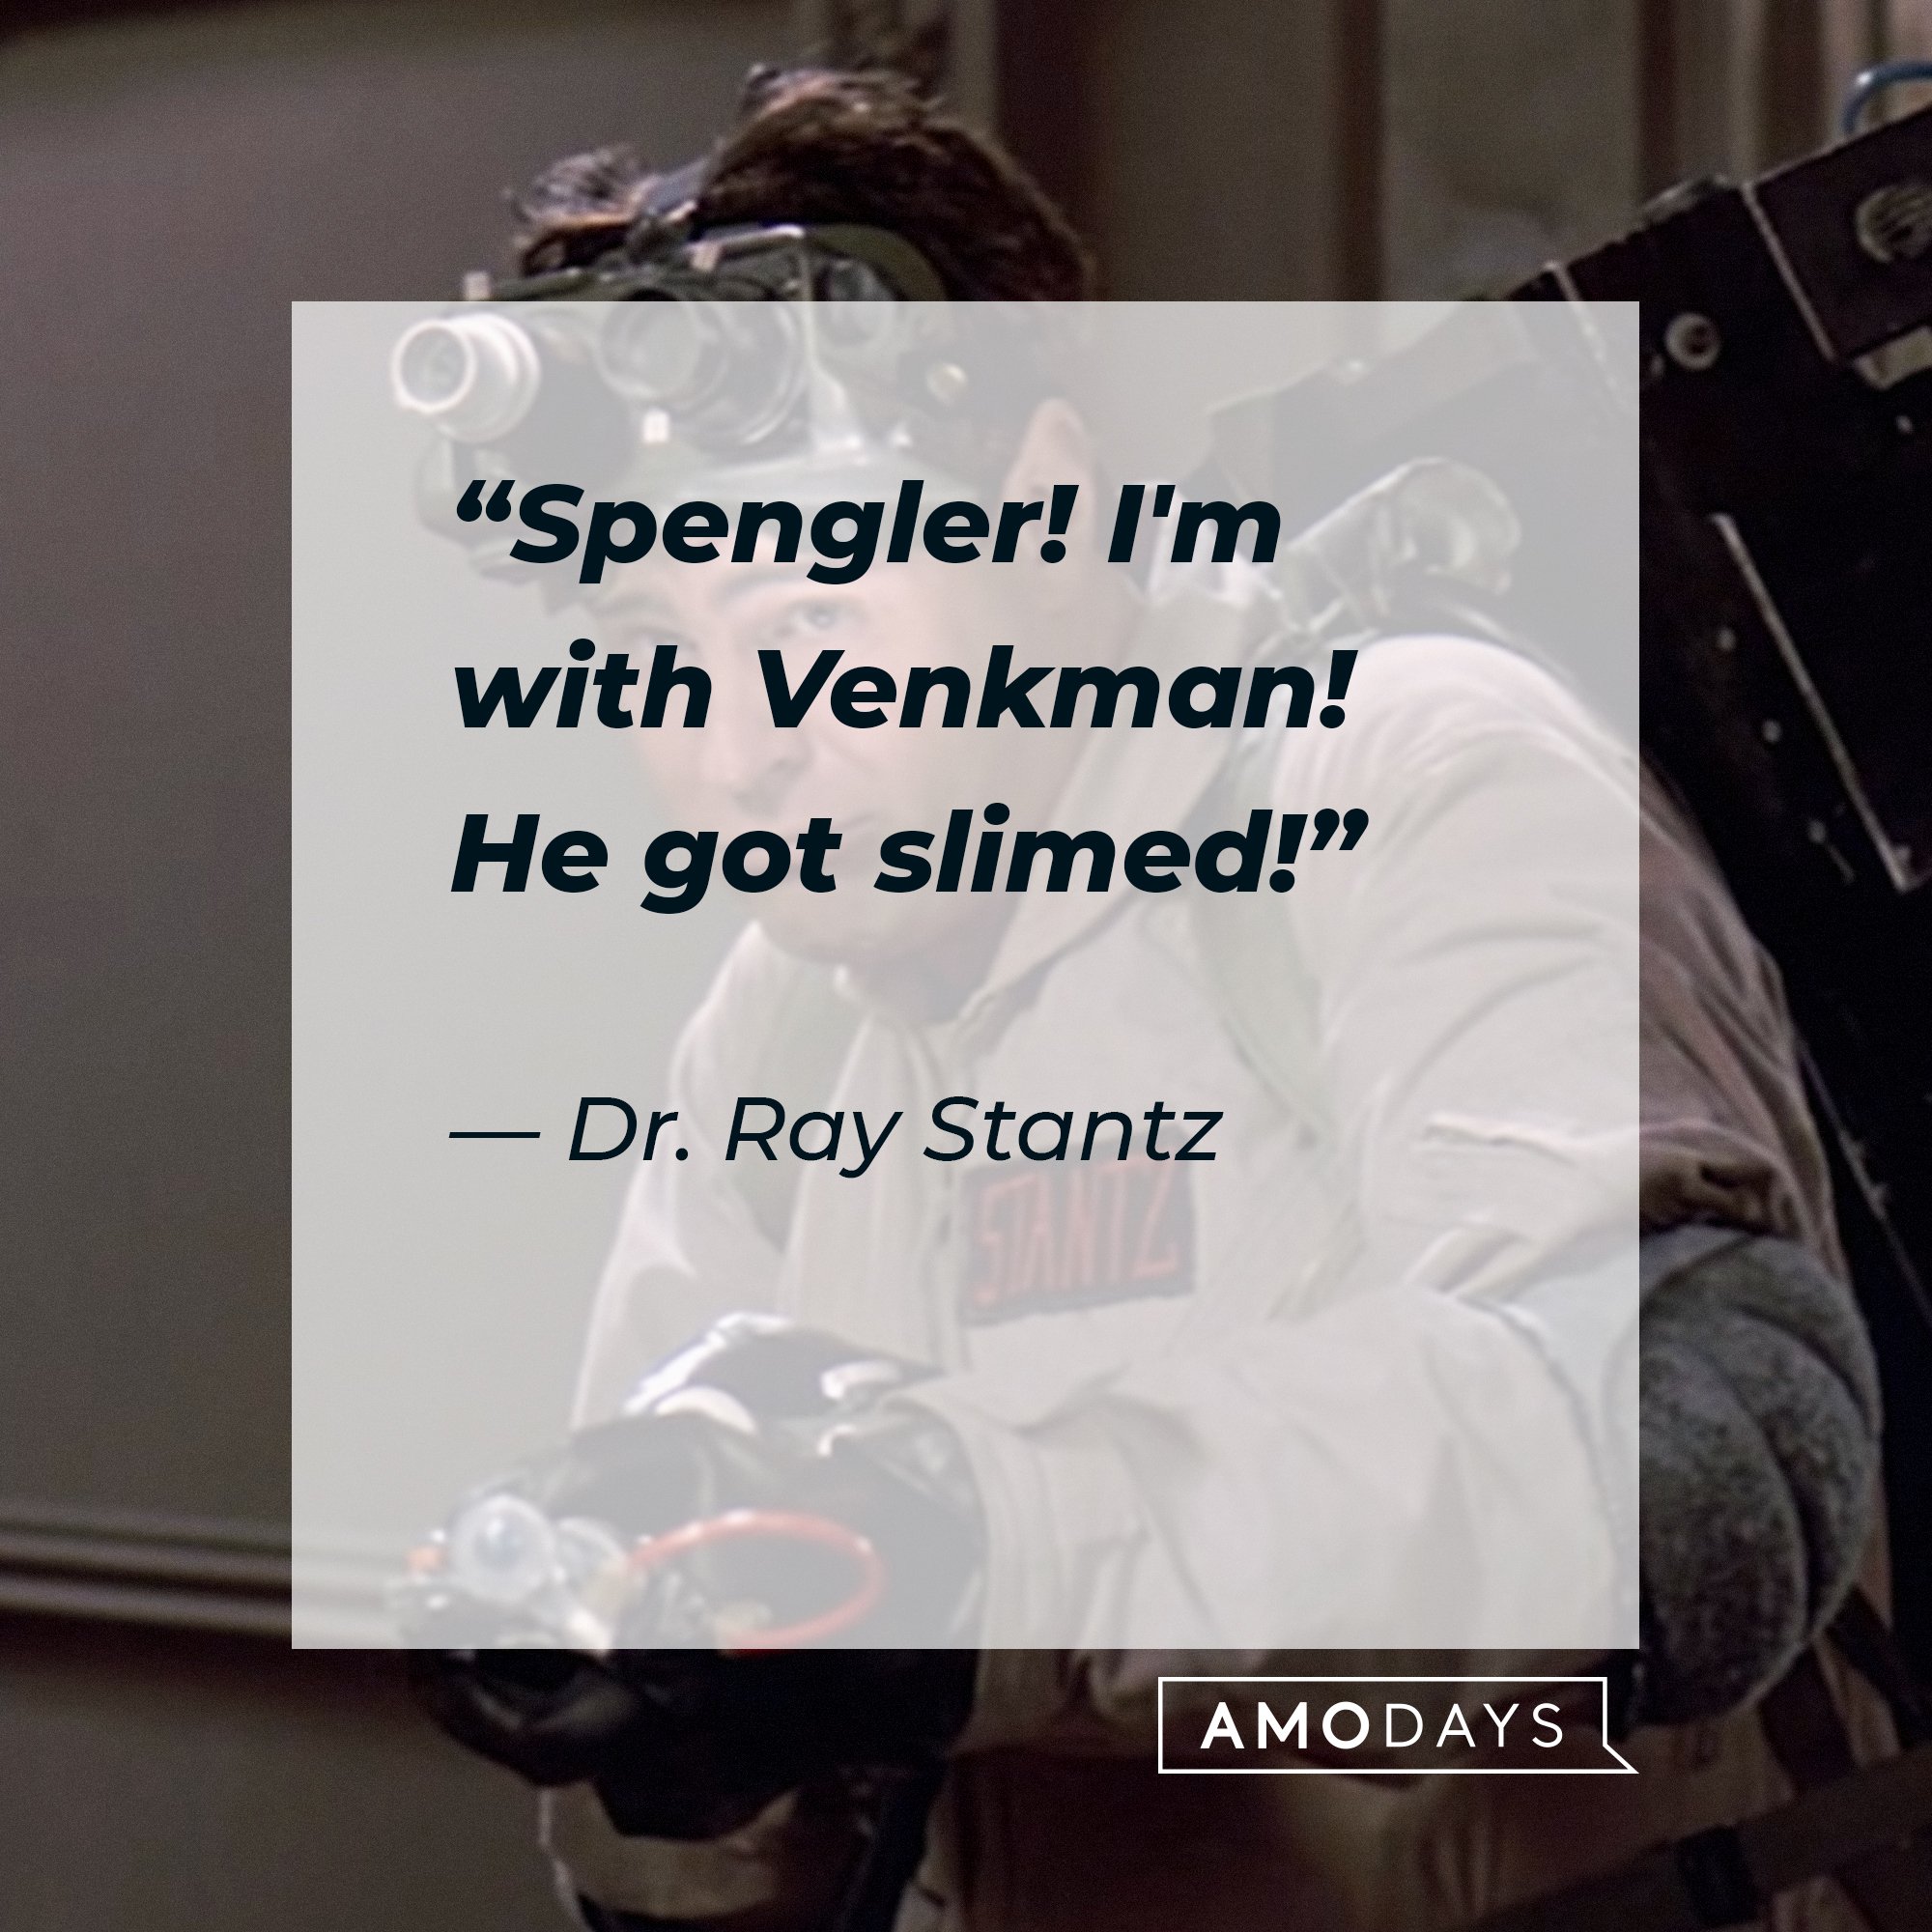 Dr. Ray Stantz's quote: “Spengler! I'm with Venkman! He got slimed!”  | Image: AmoDays